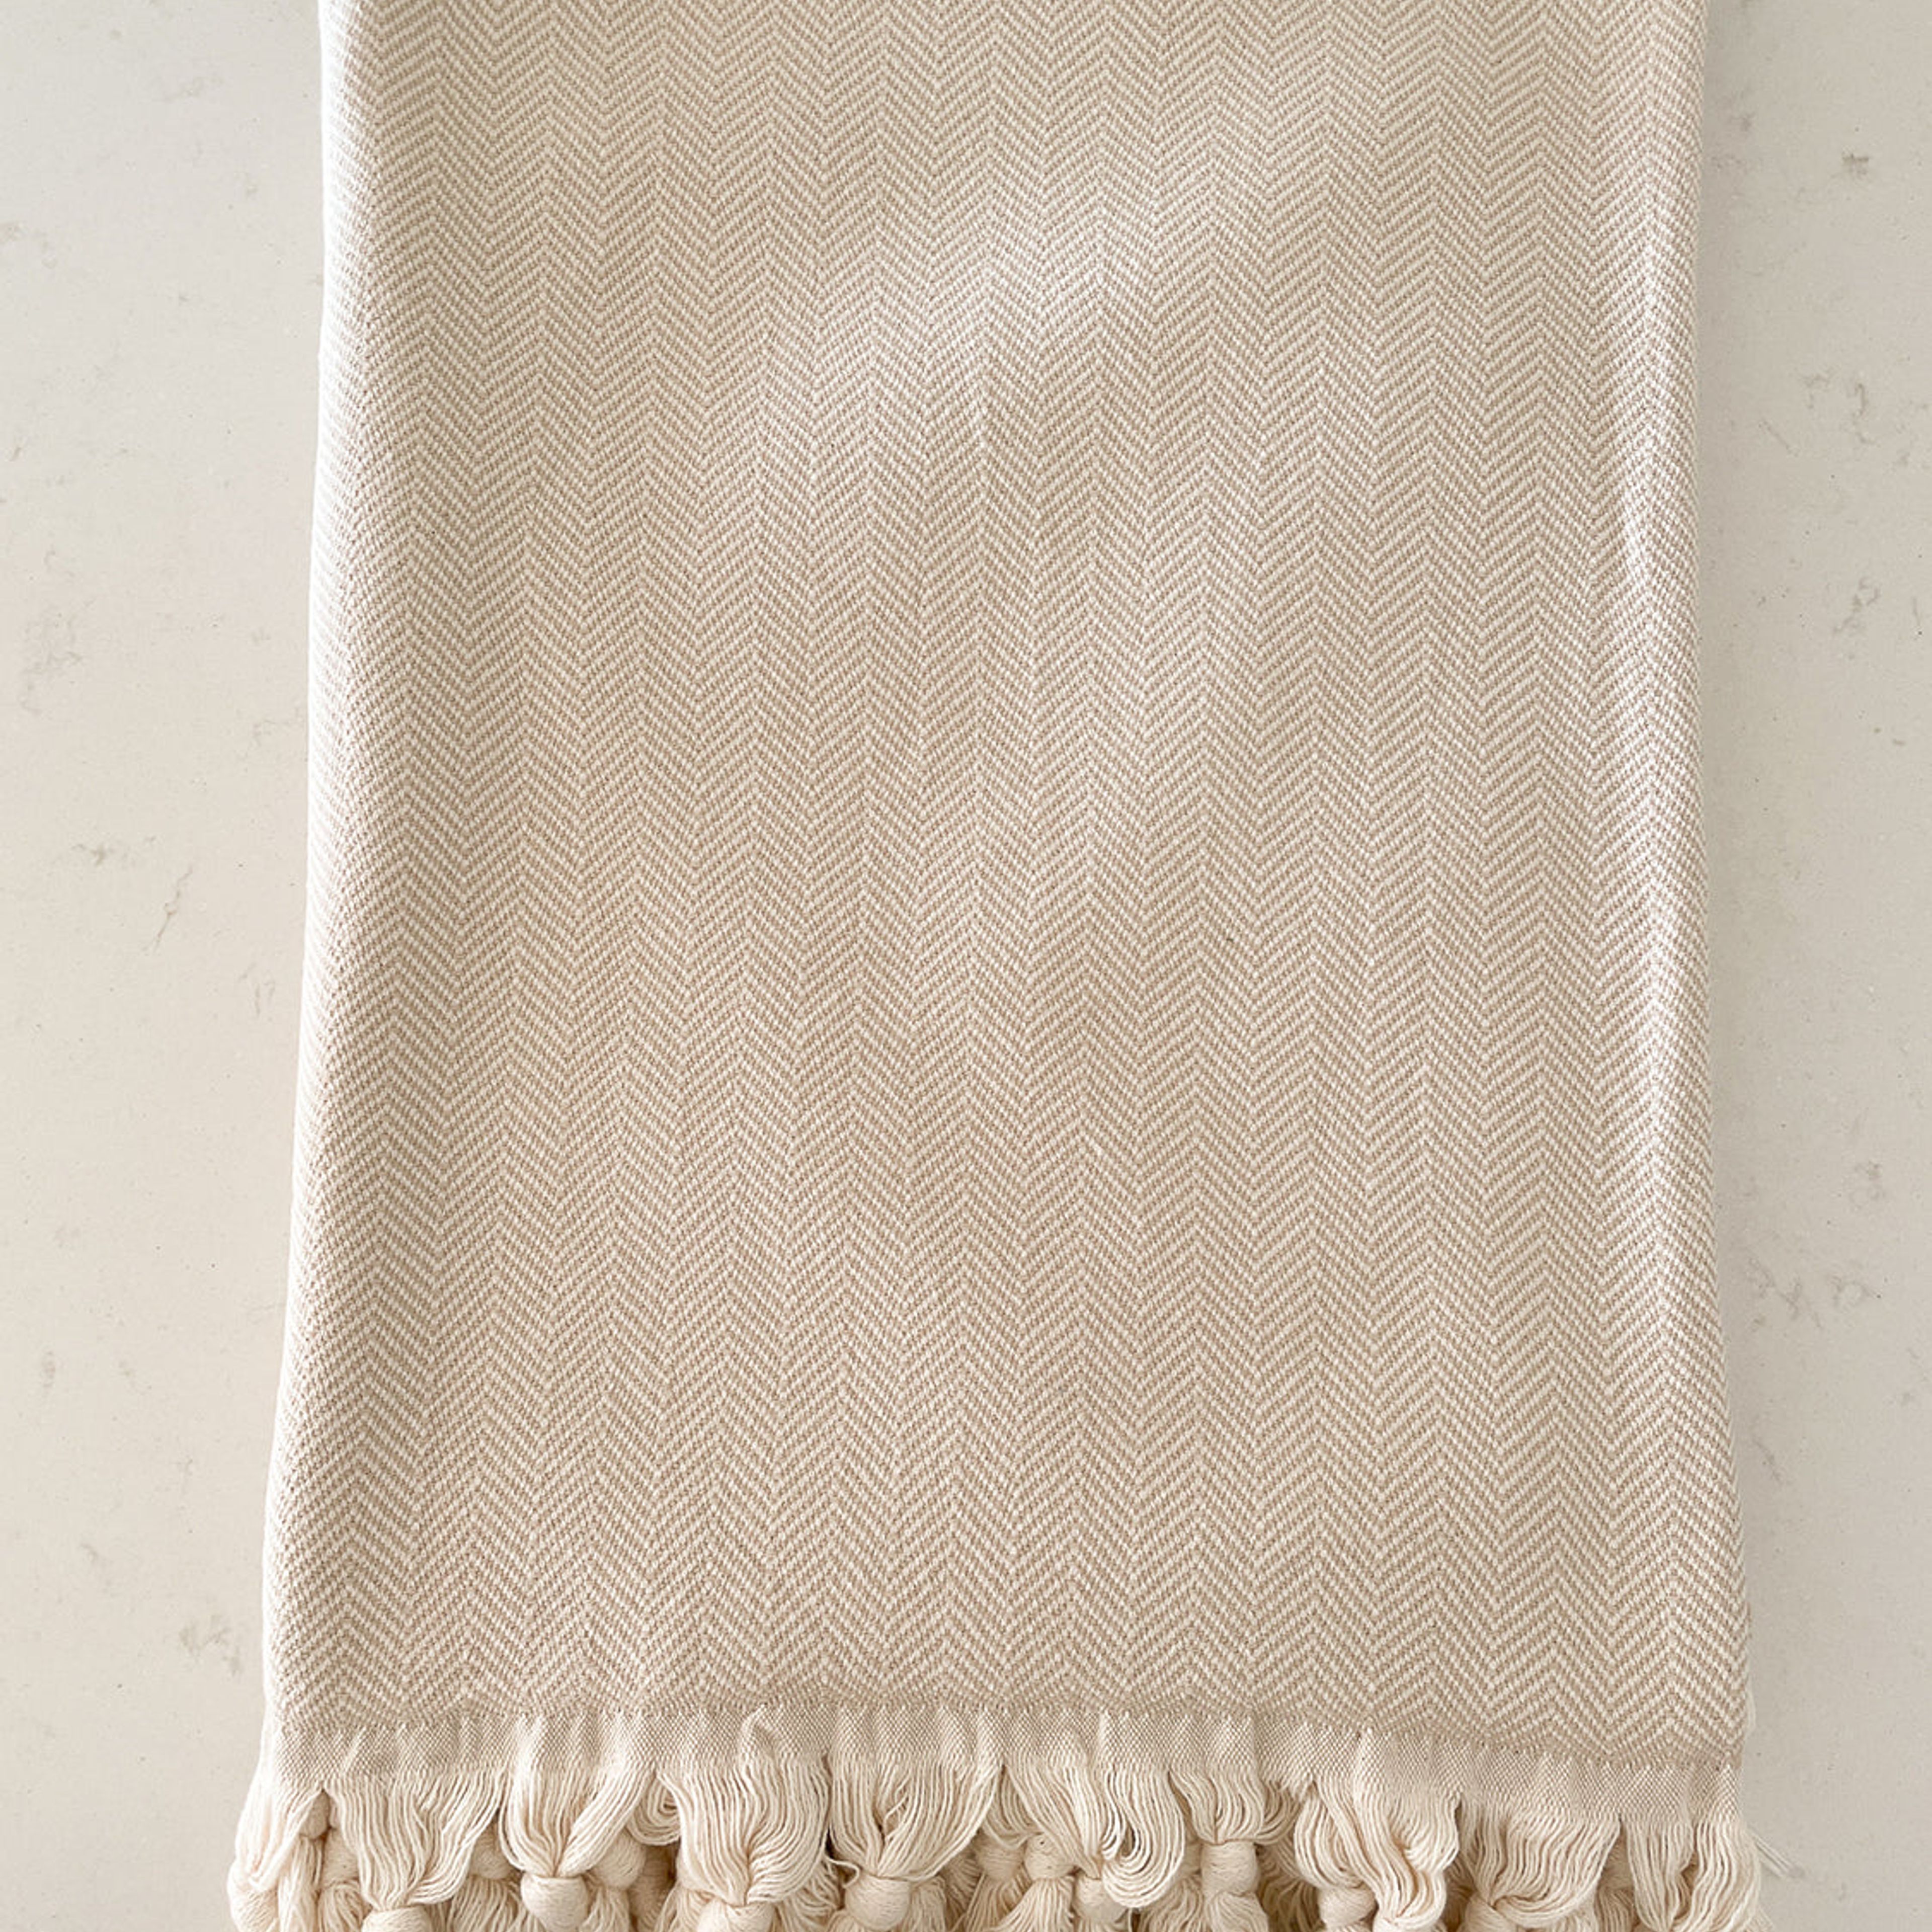 Turkish Cotton Herringbone Throw with Tassels 55x75